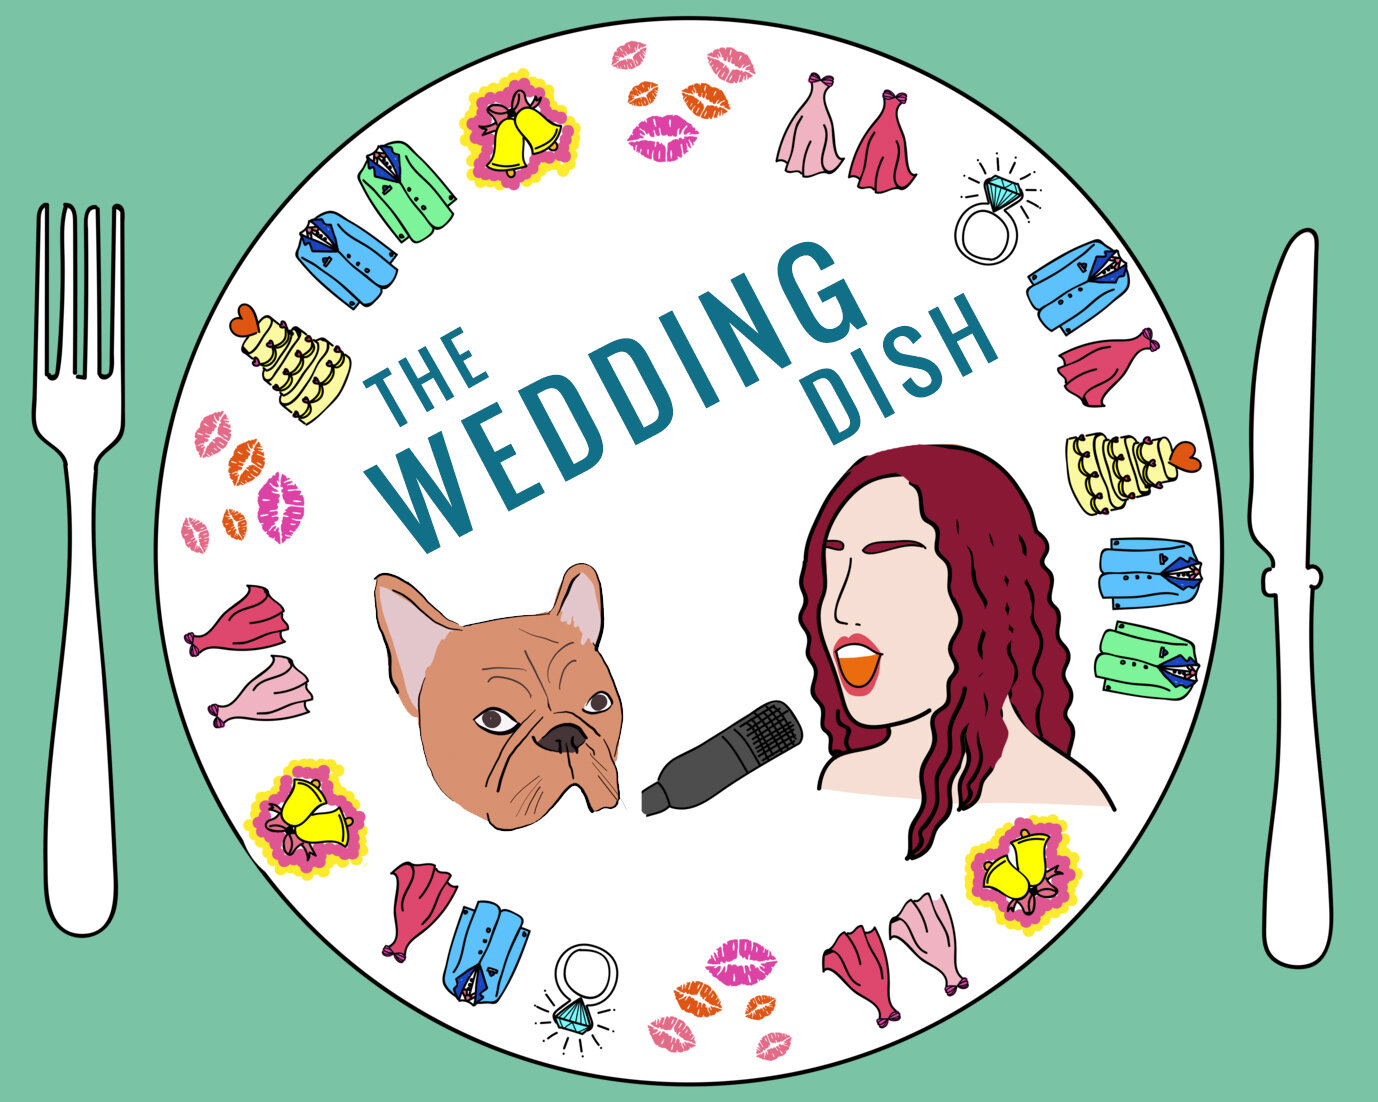 The Wedding Dish